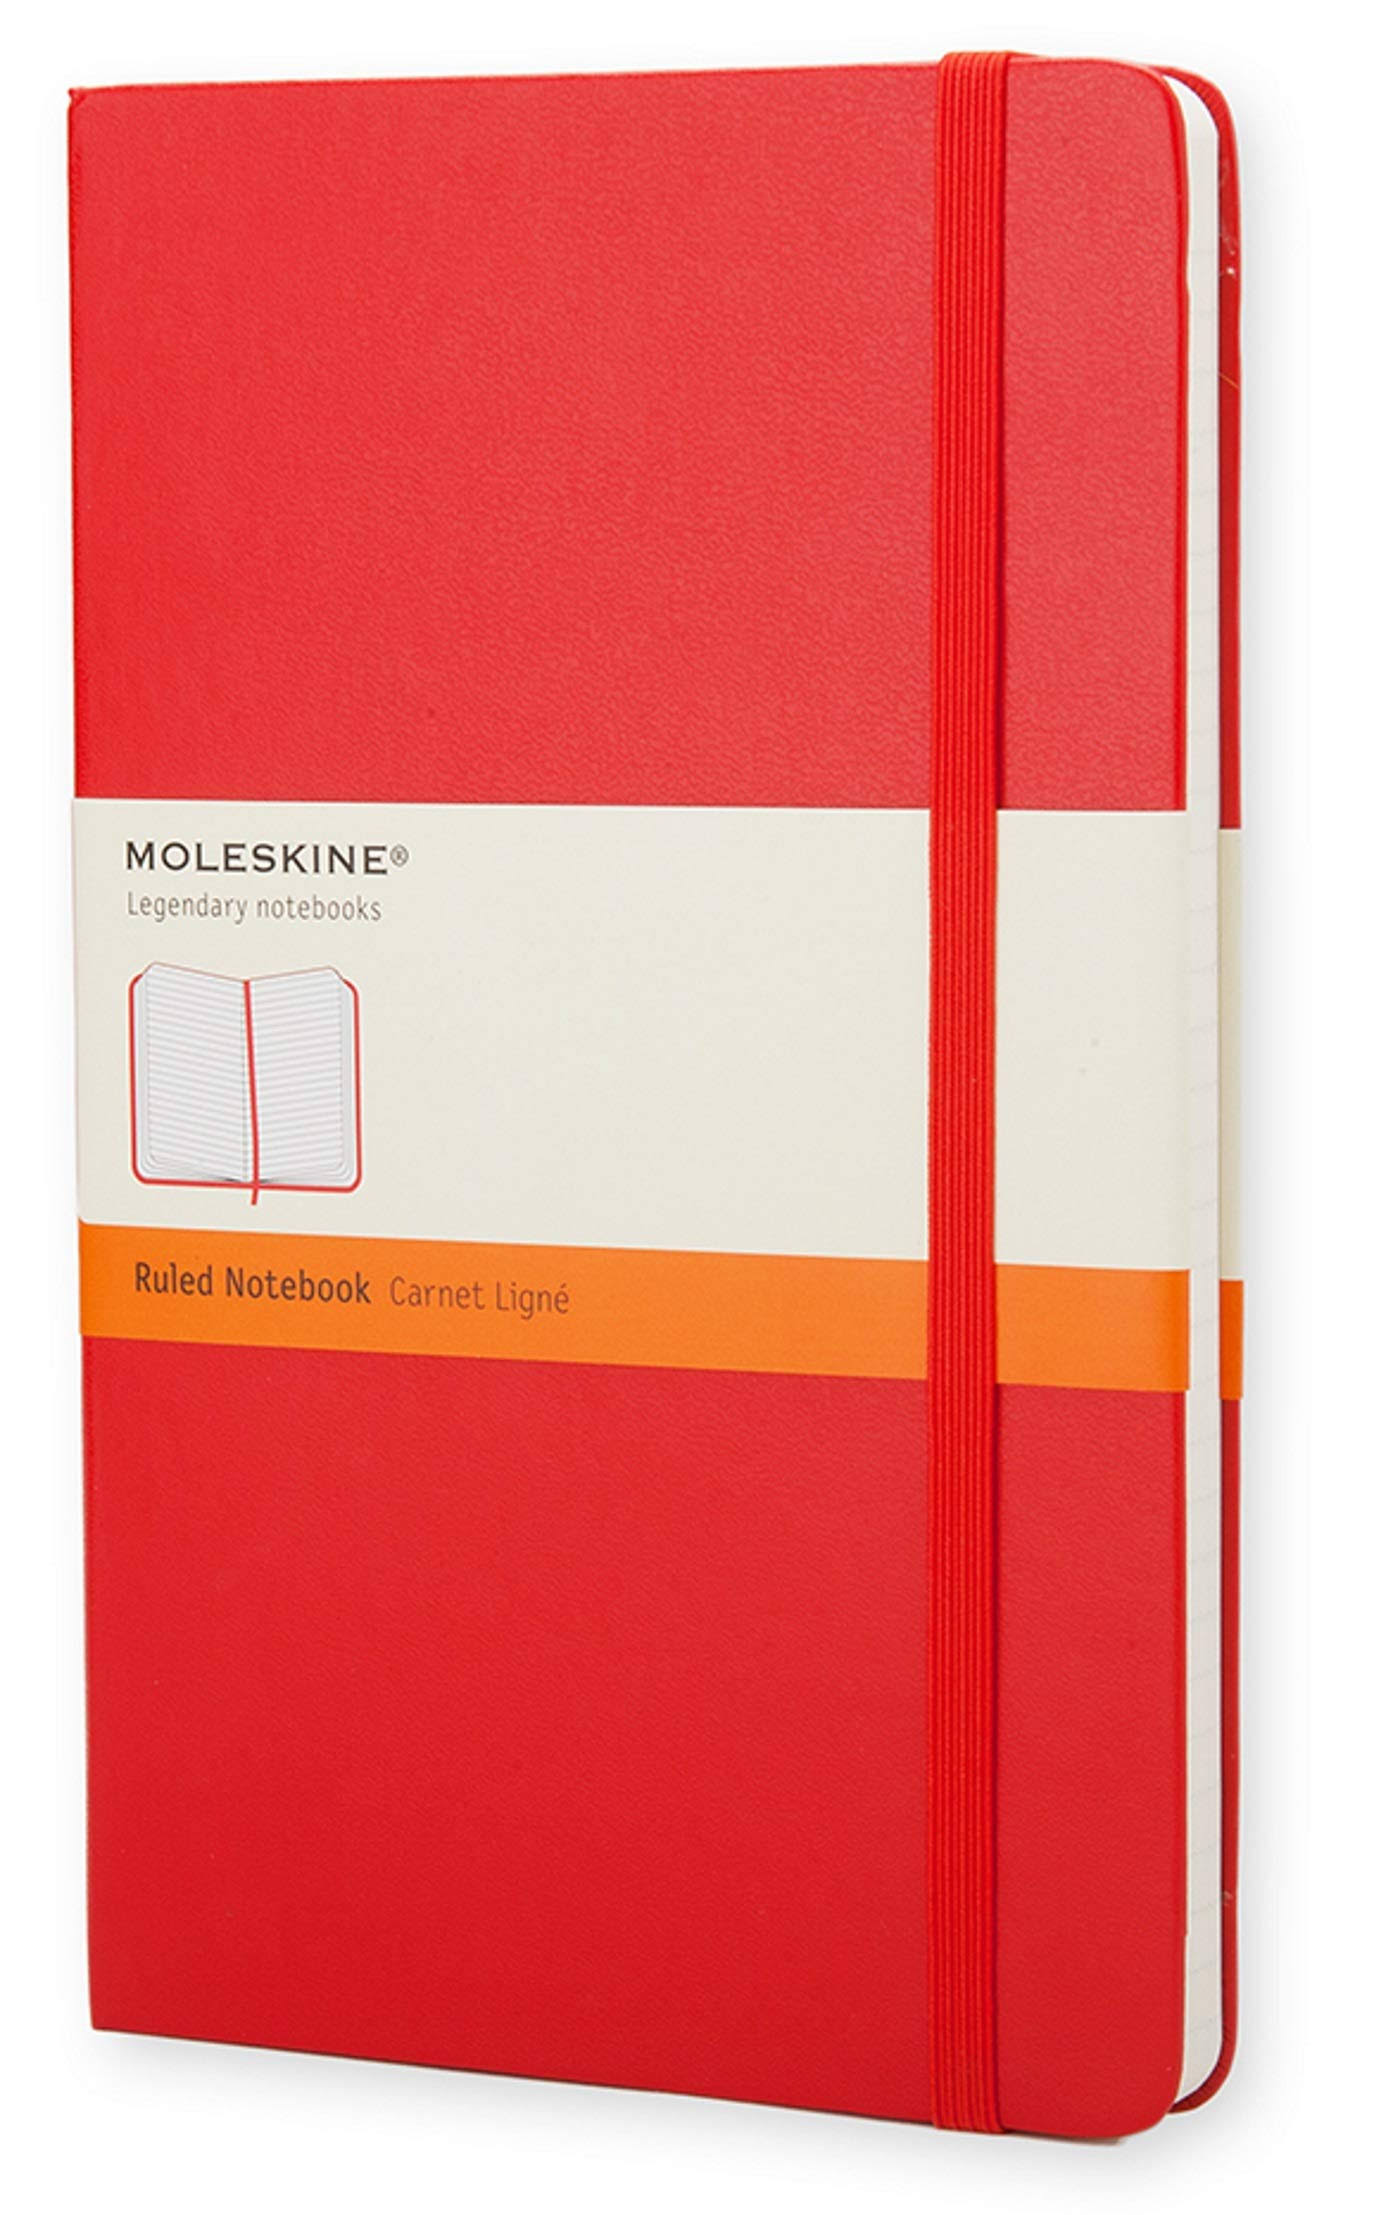 Moleskine Ruled Notebook - Red, Large